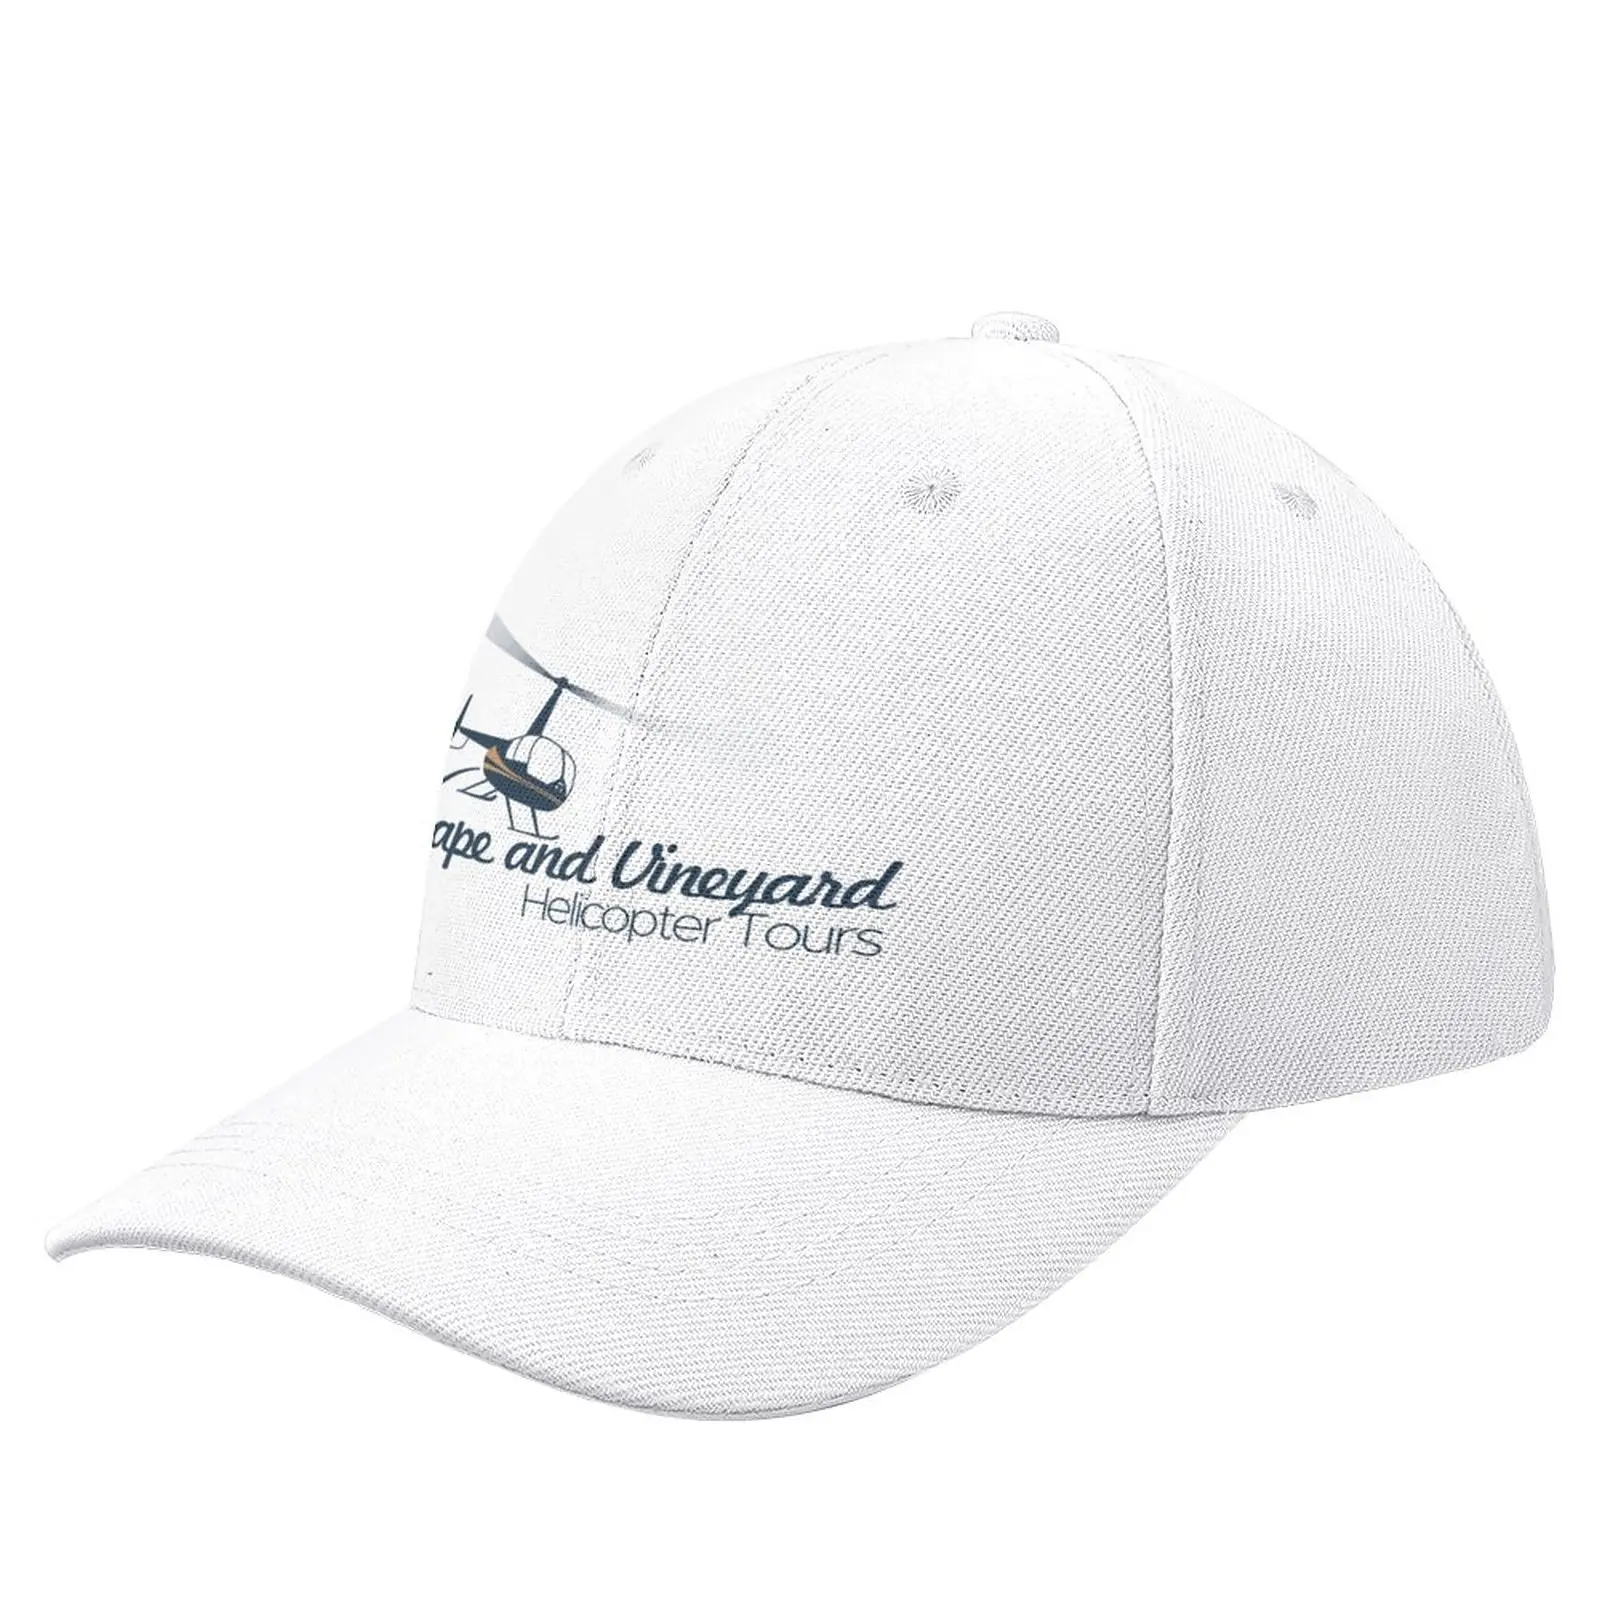 

cape and vineyard heli tours Baseball Cap New In Hat Visor Snapback Cap Hat Female Men'S